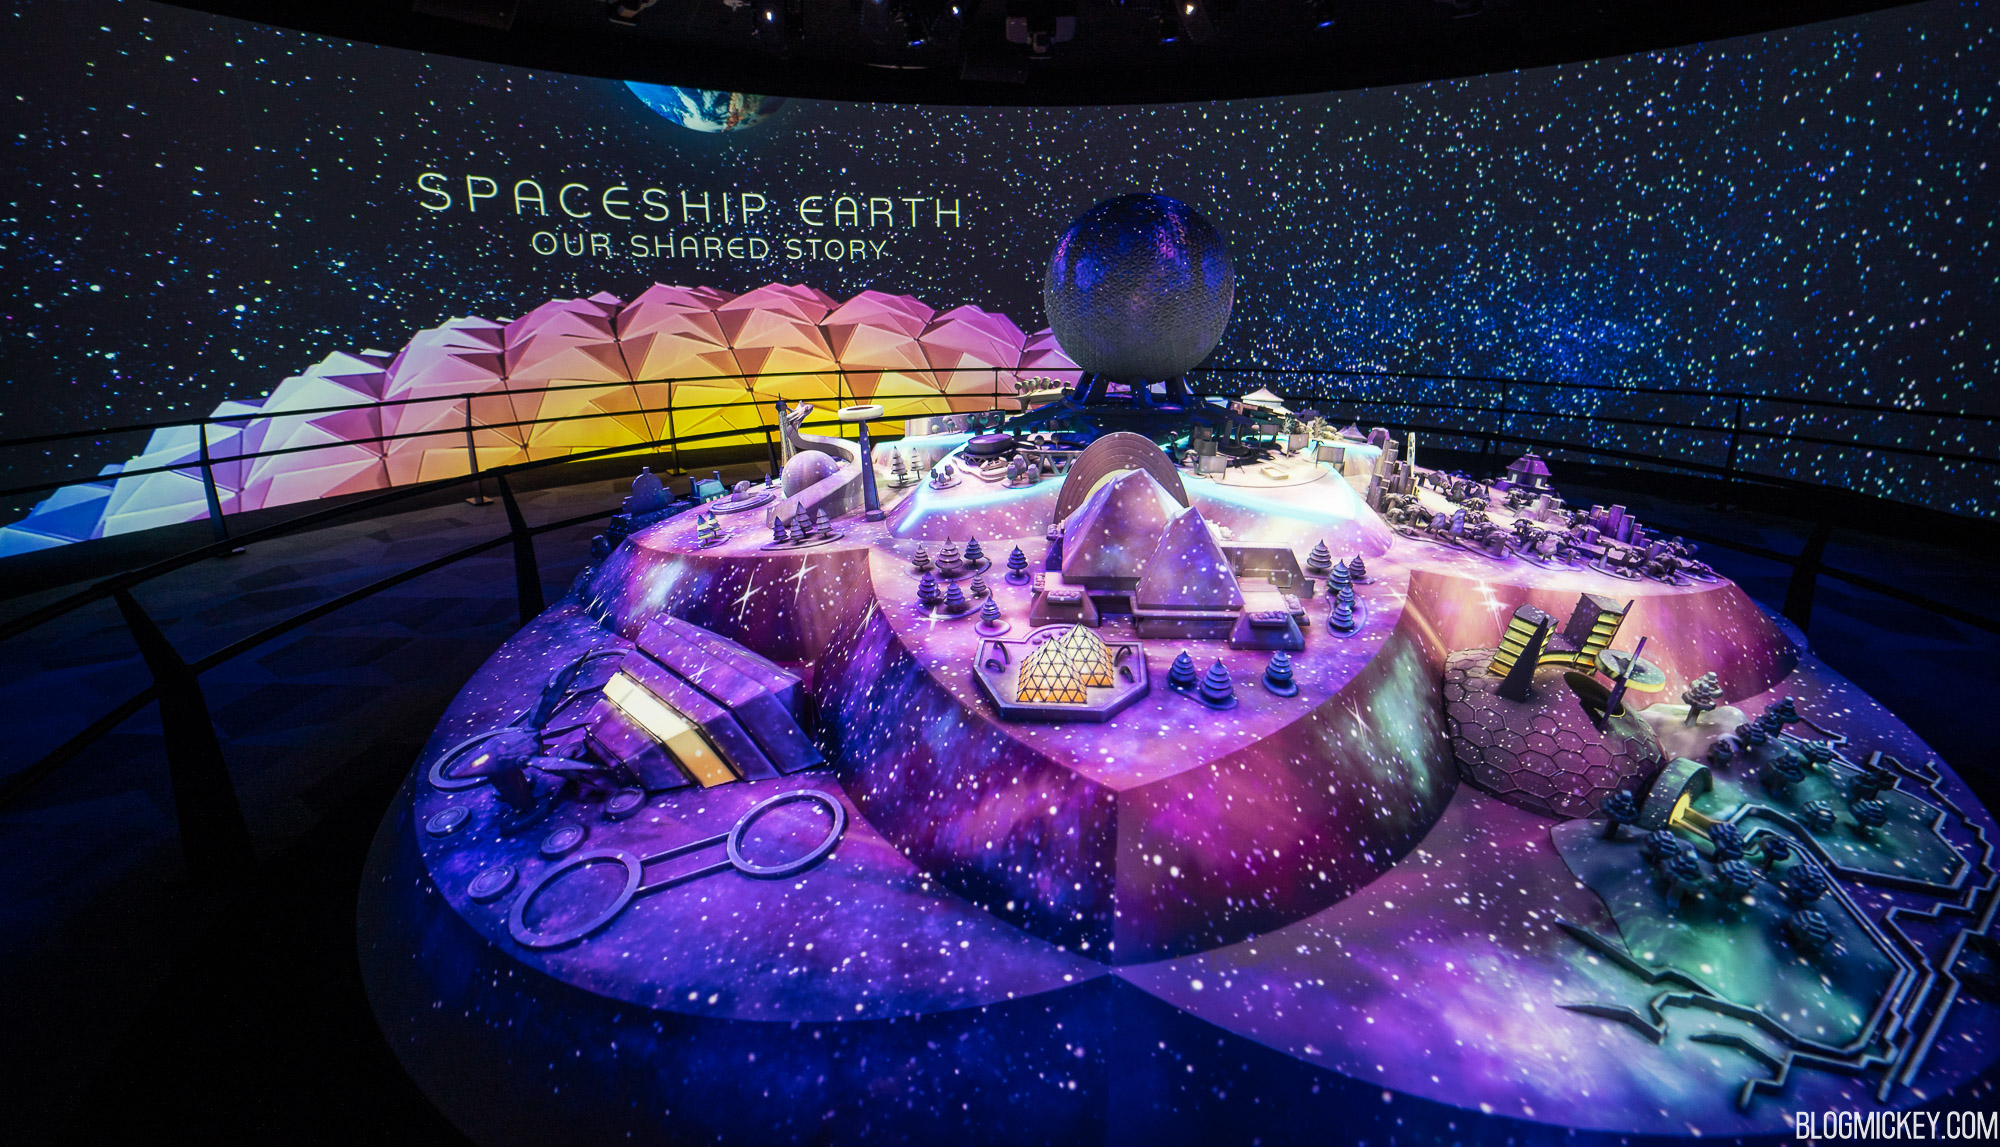 Spaceship Earth Refurbishment Project Tracker at EPCOT